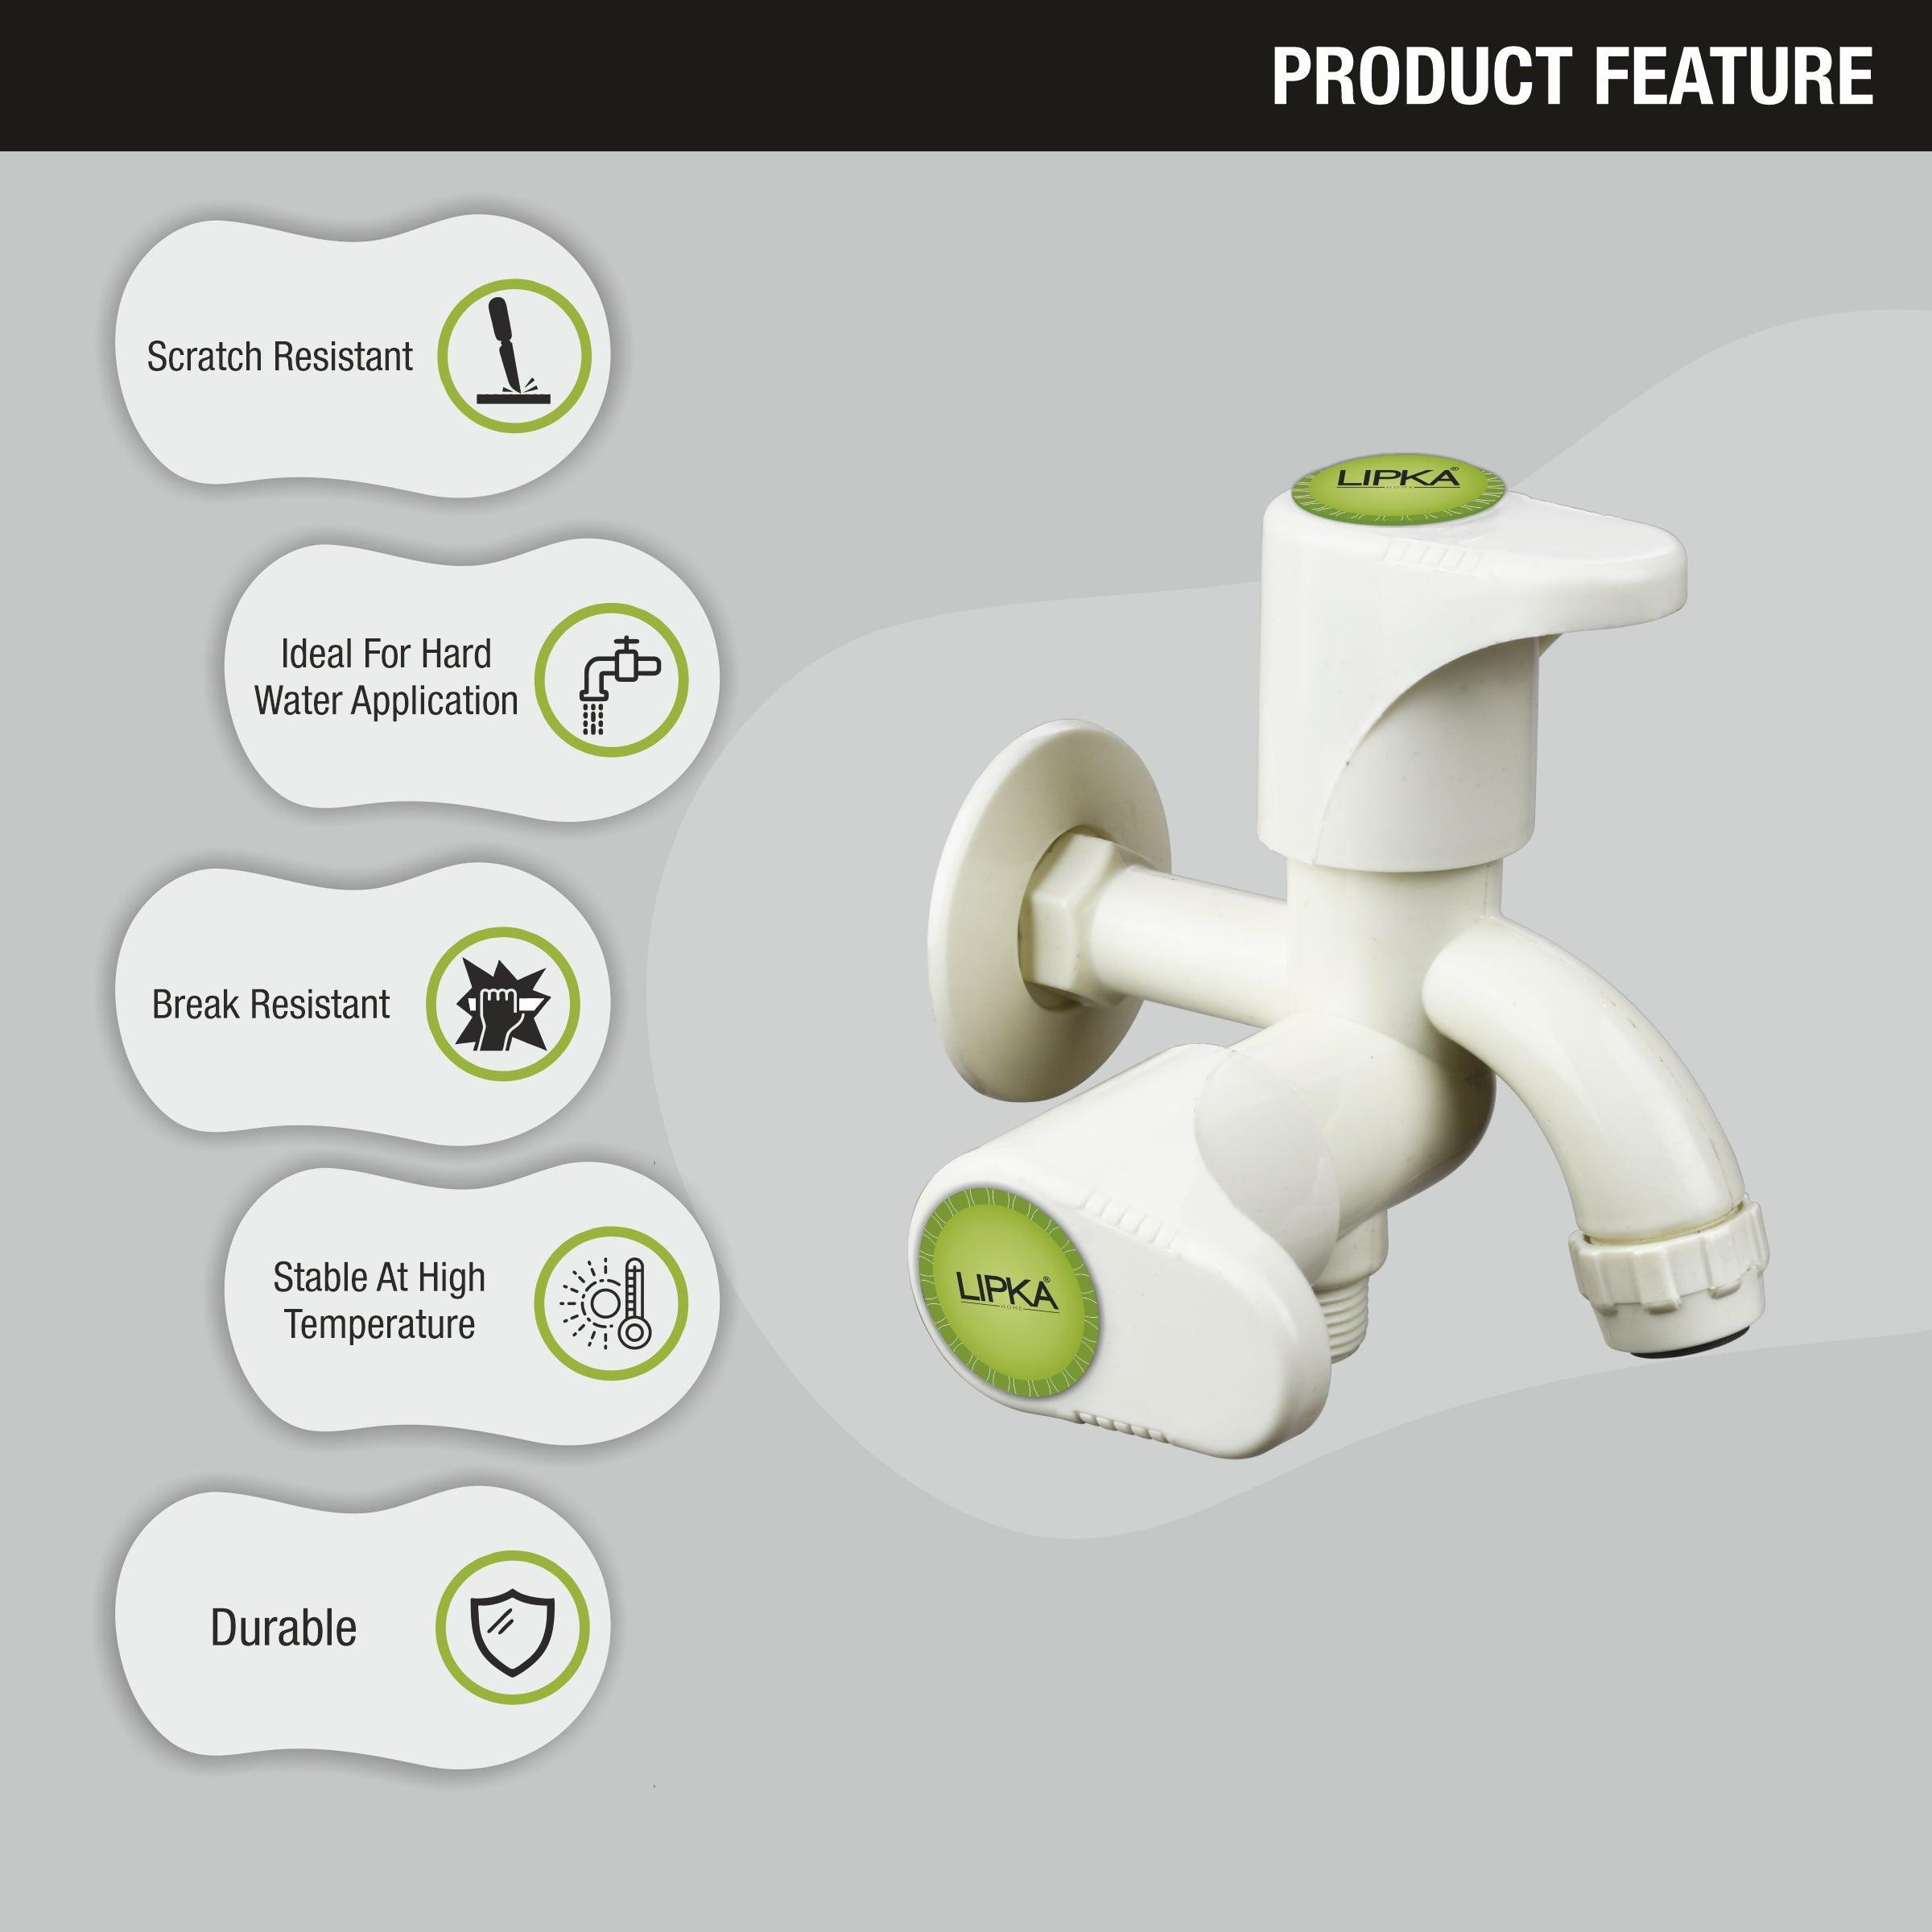 Designo Two Way Bib Tap PTMT Faucet (Double Handle) features